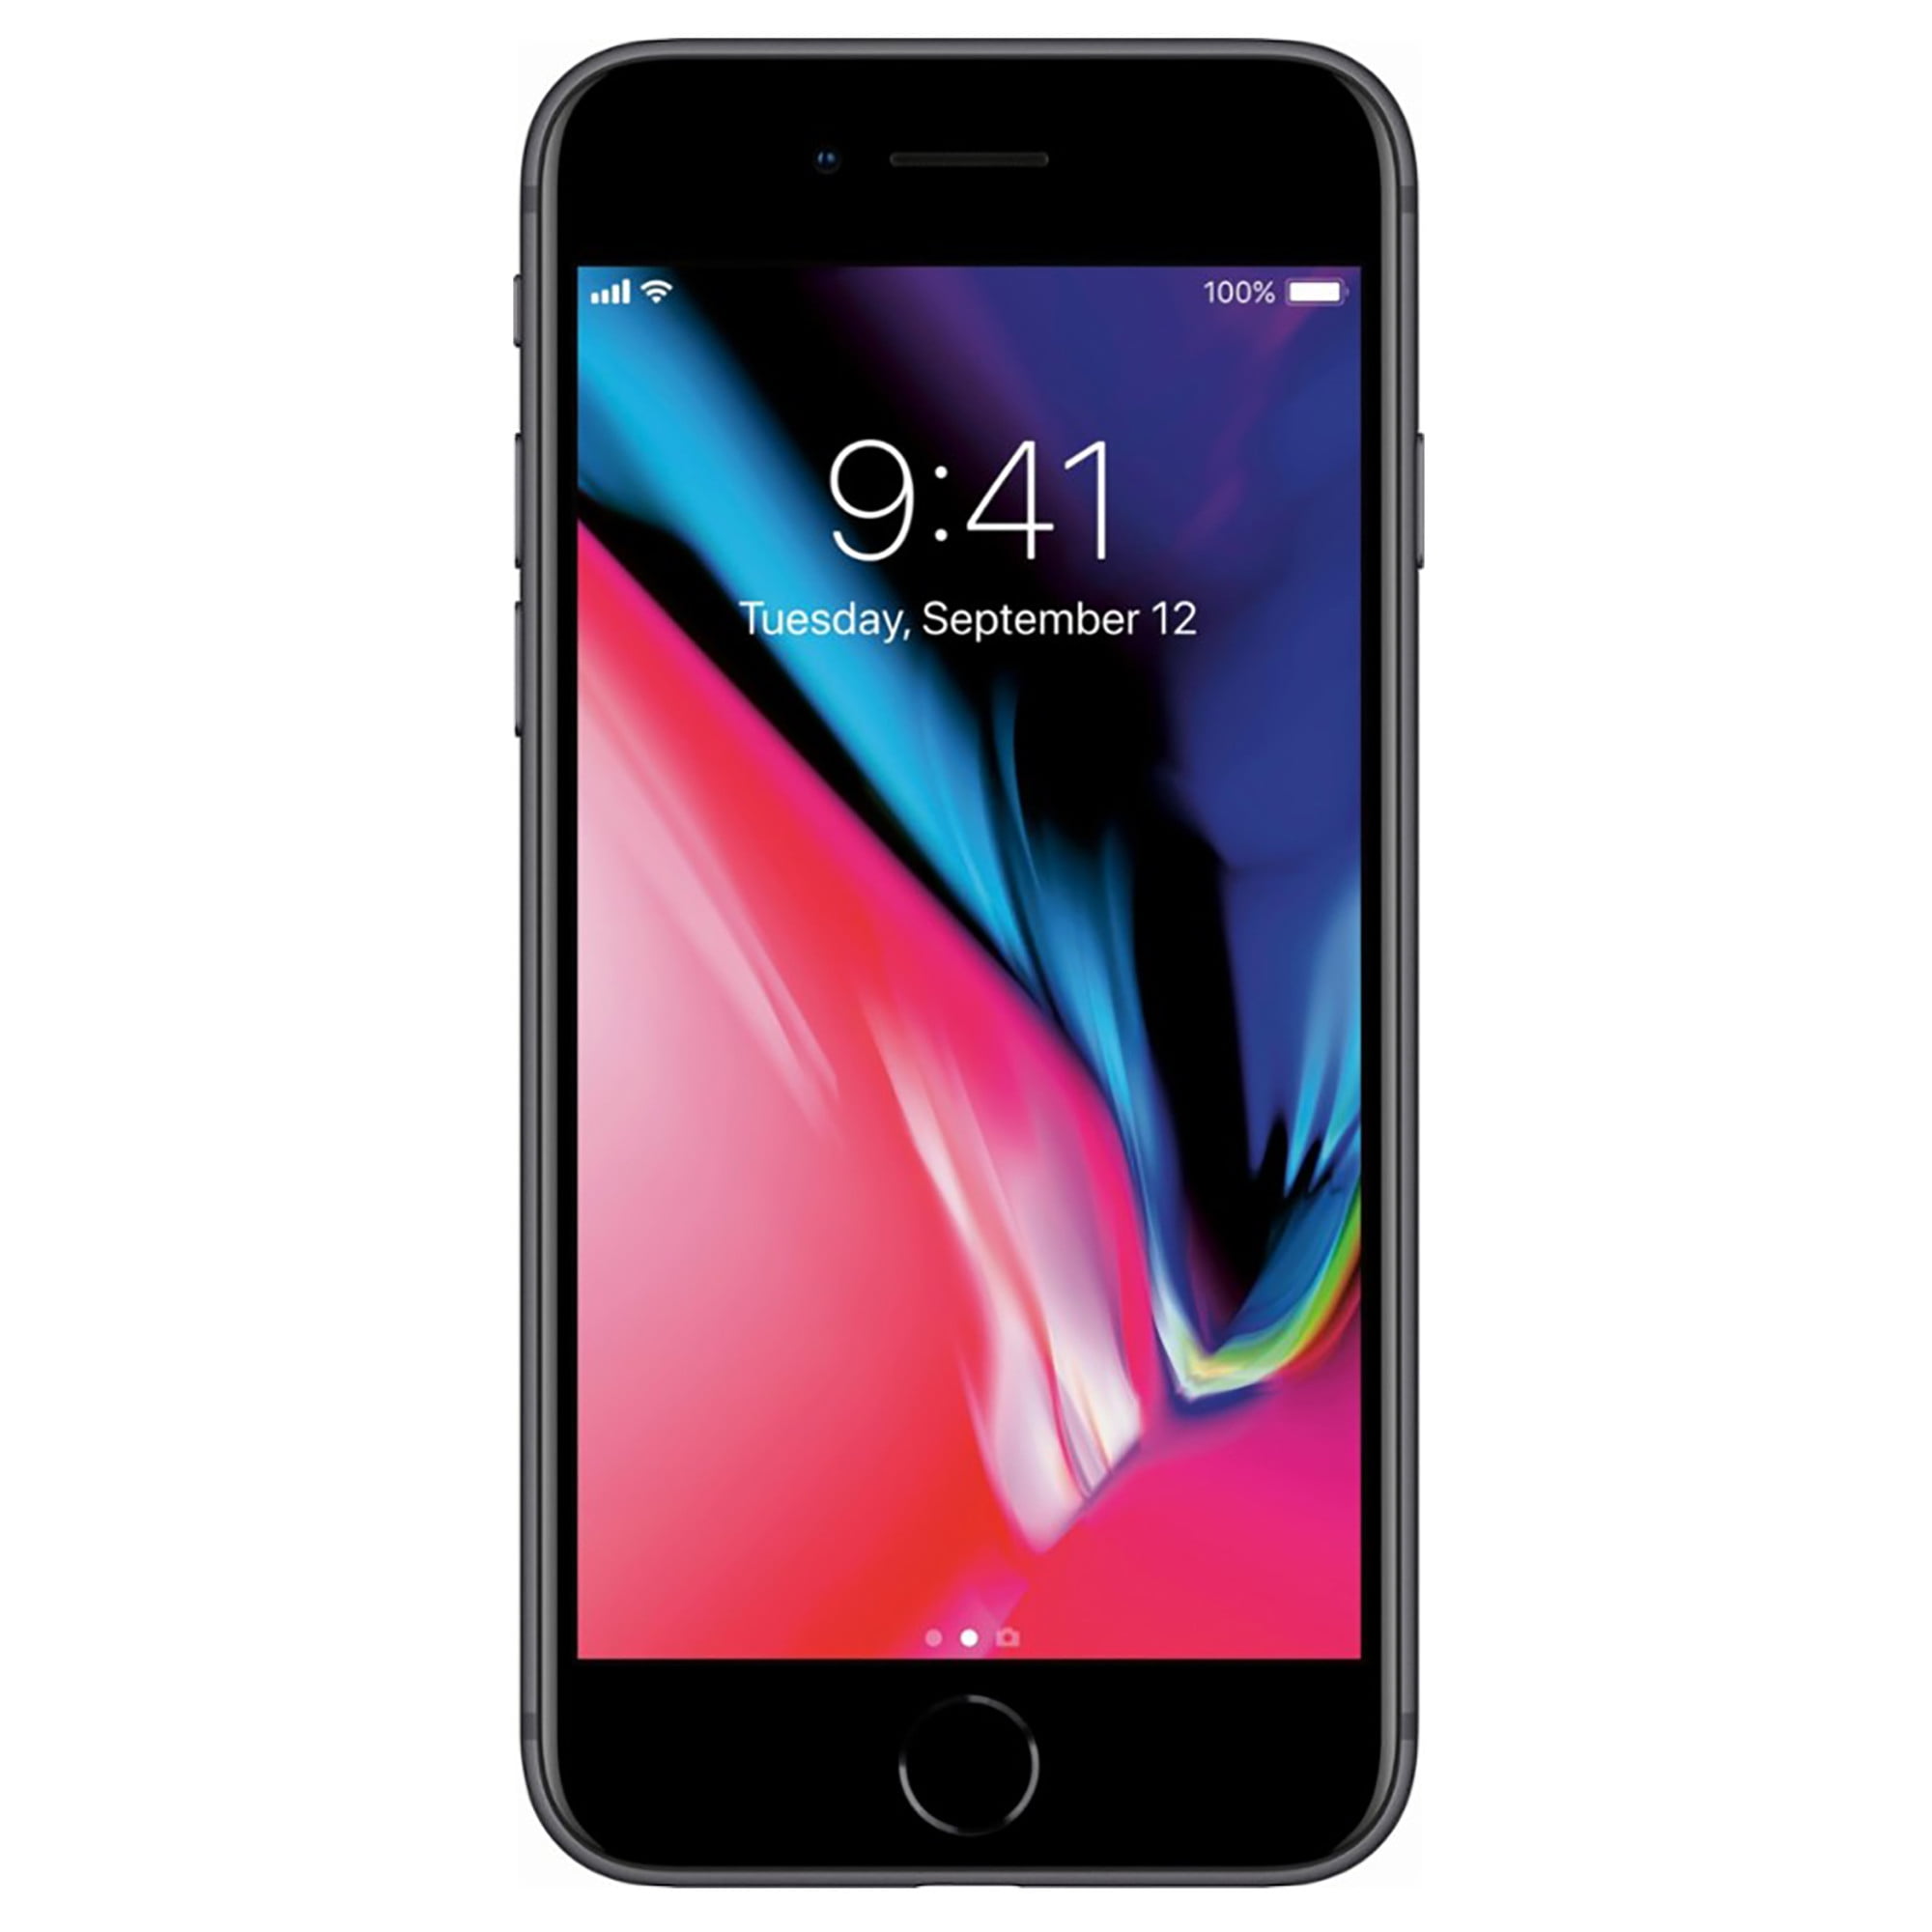 Apple iPhone 8 64GB GSM Unlocked Phone w/ 12MP Camera - Space Gray  (Refurbished)